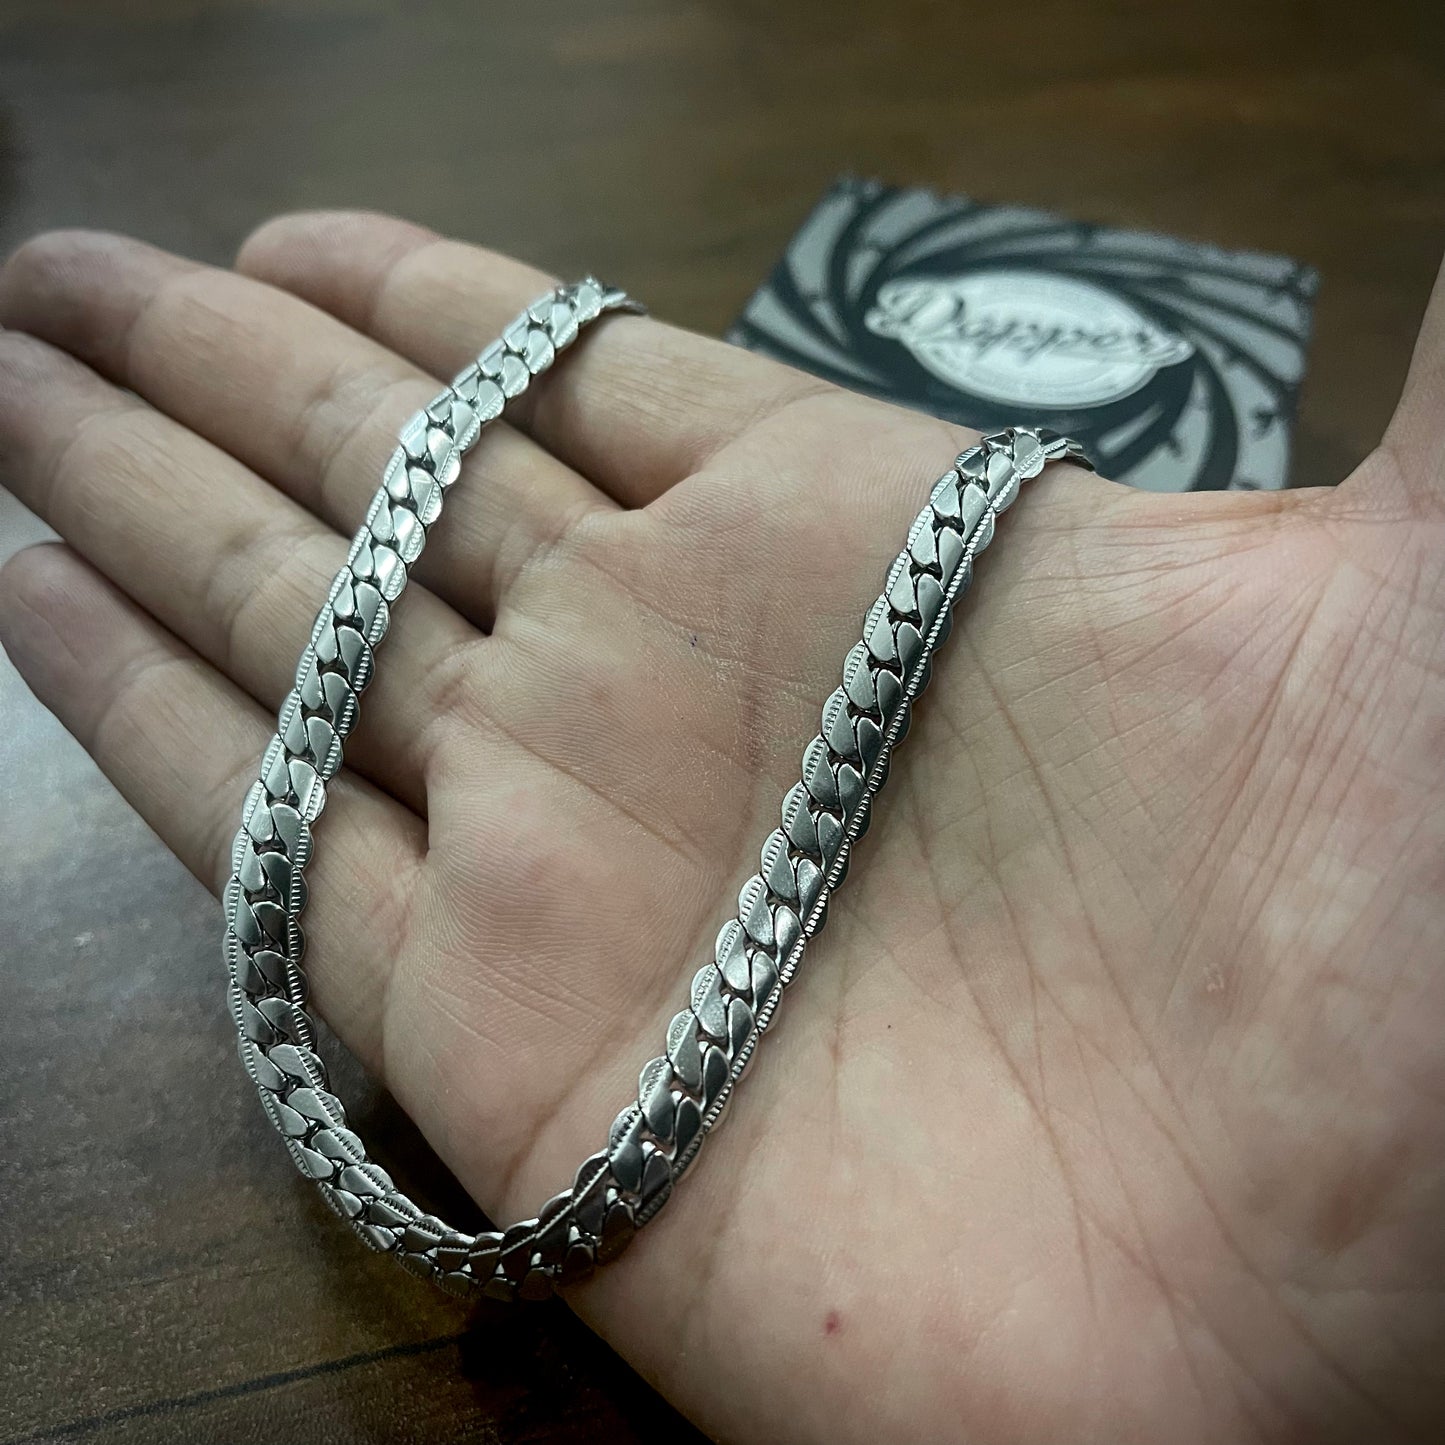 8mm Silver Miami Link Neck Chain For Men